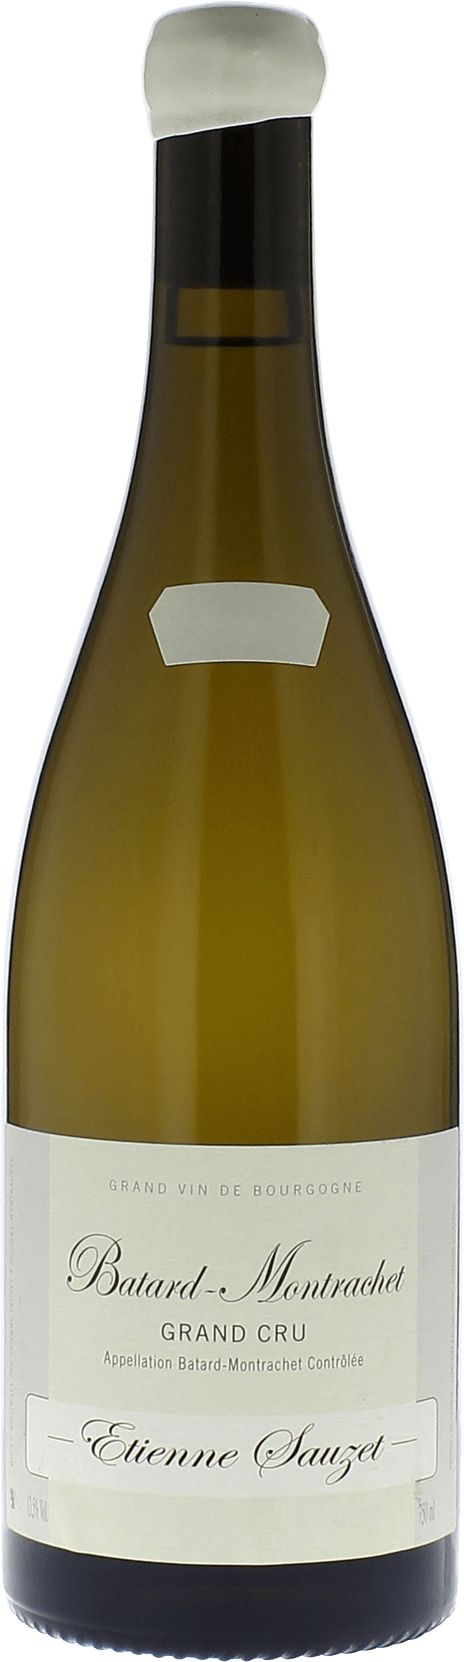 Batard montrachet grand cru 2012 Domaine SAUZET, Bourgogne blanc